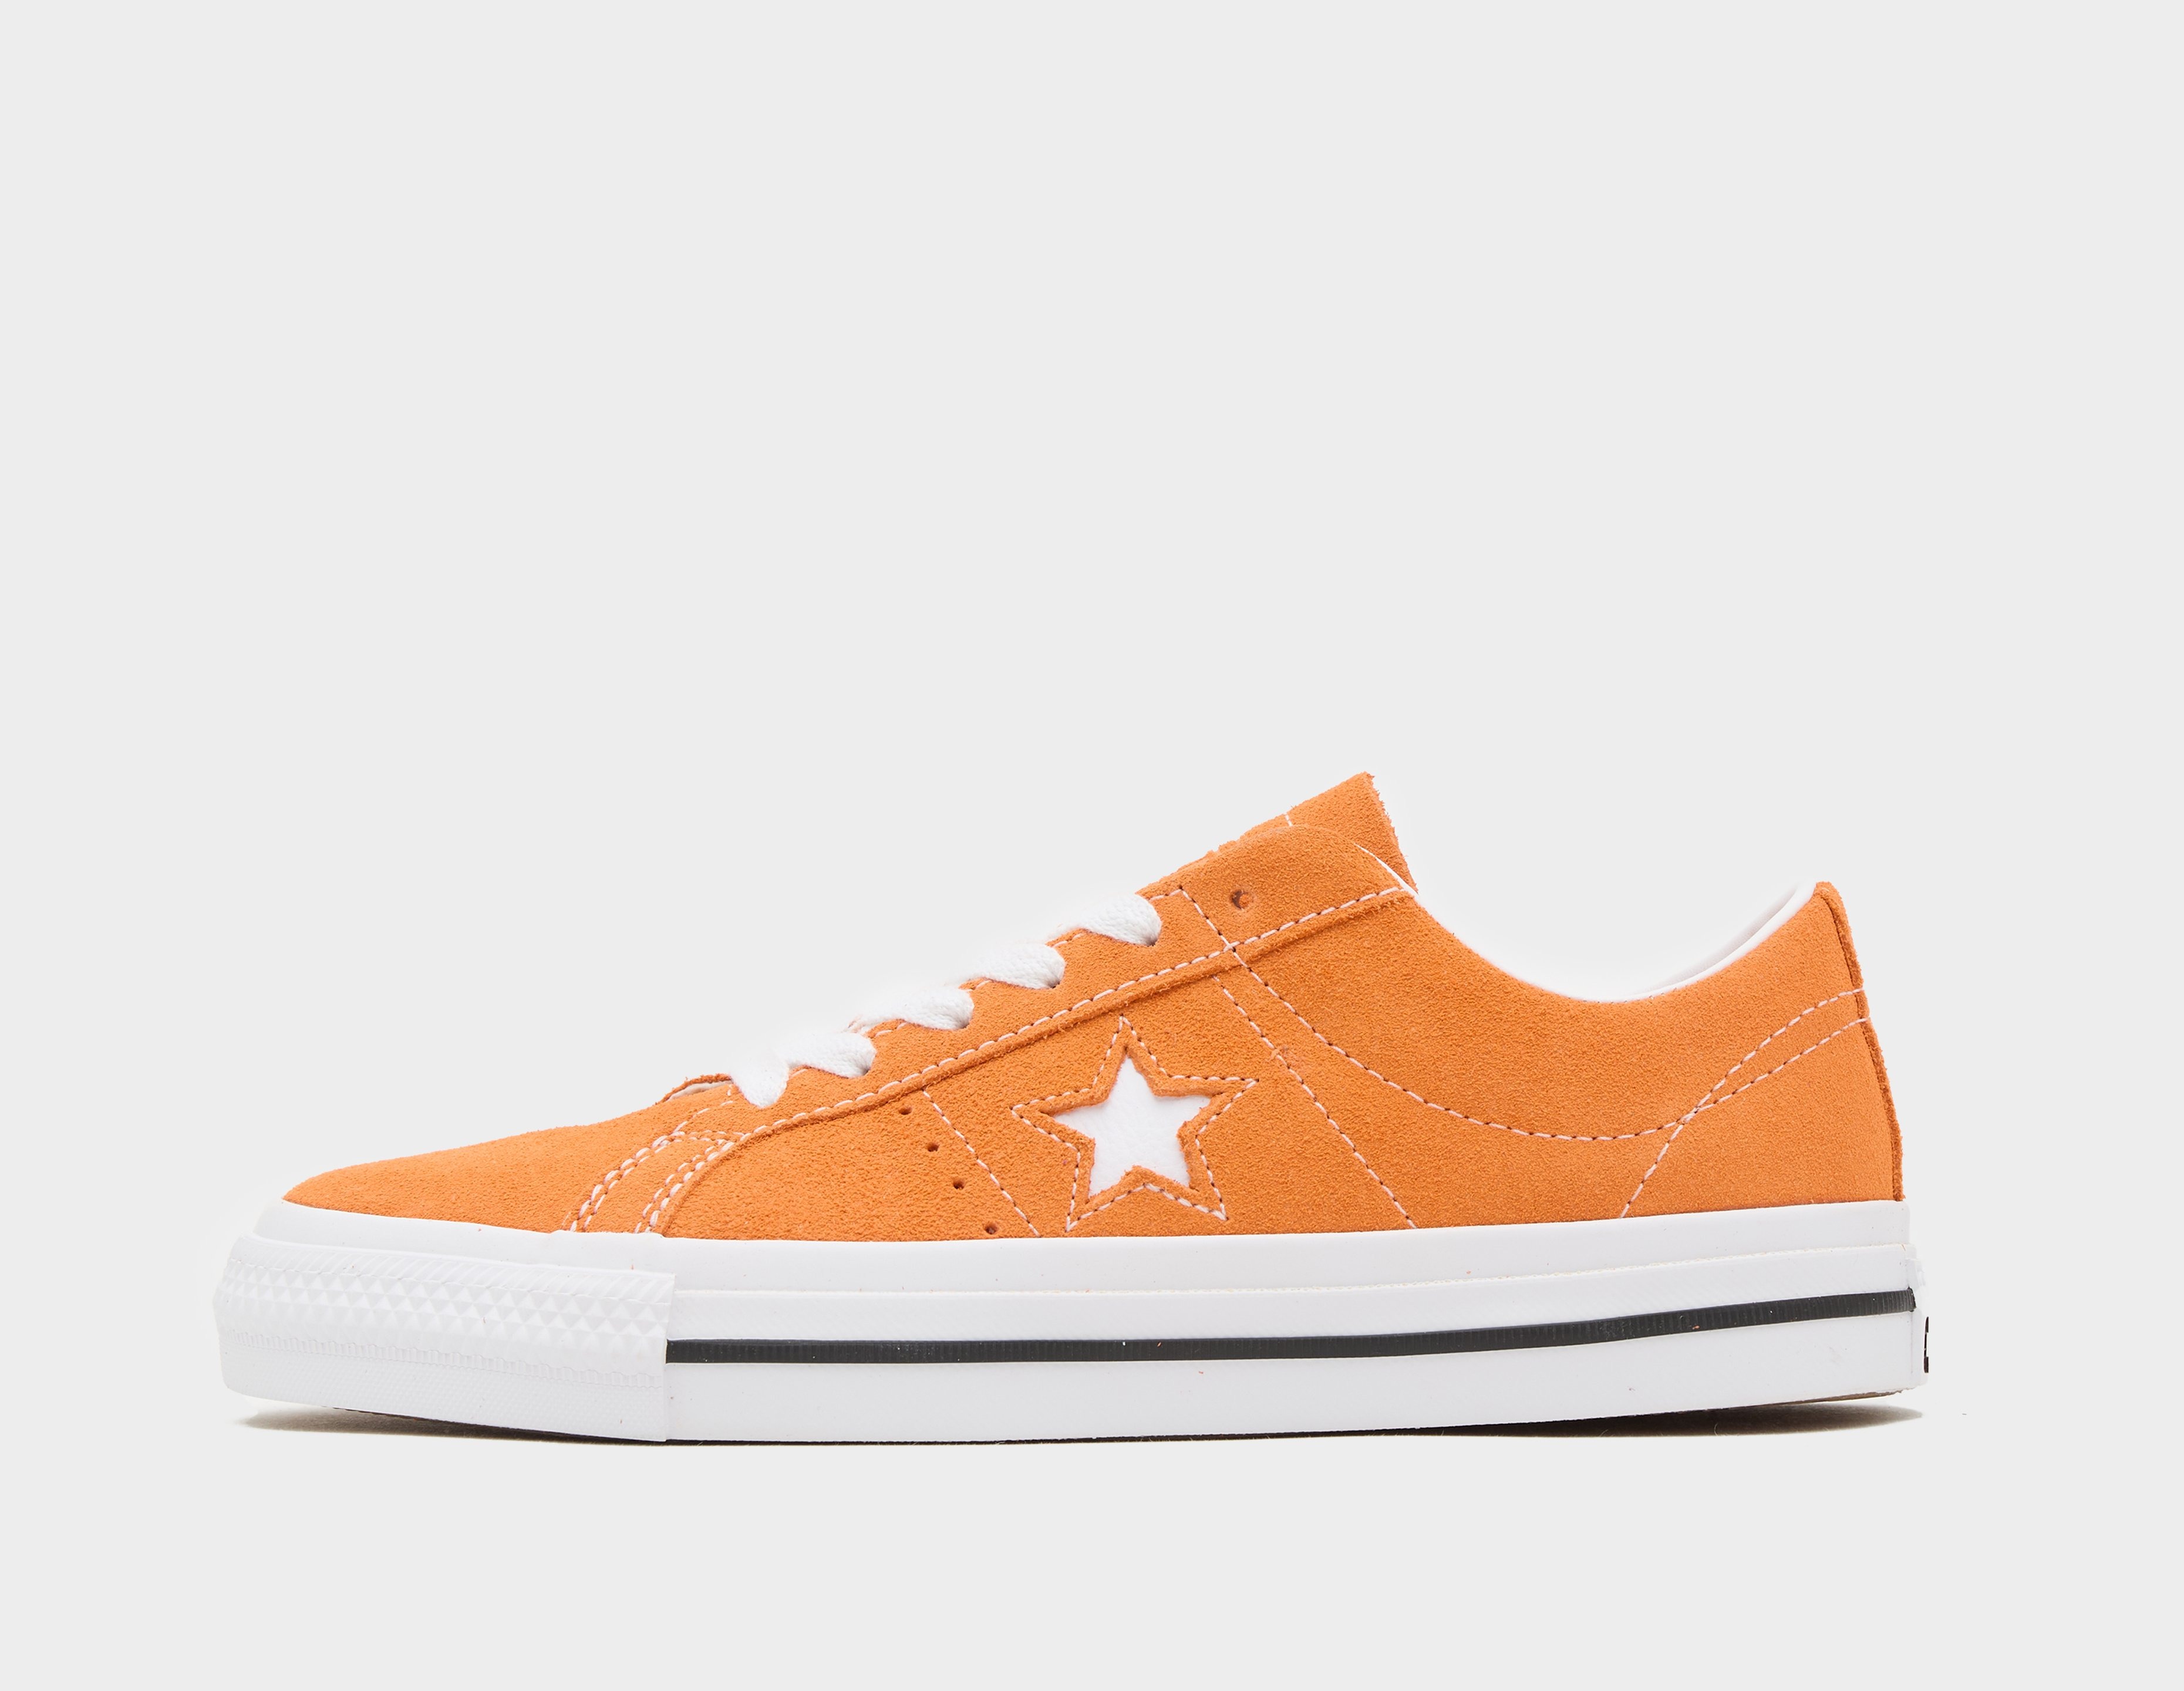 converse one star pro women's, orange